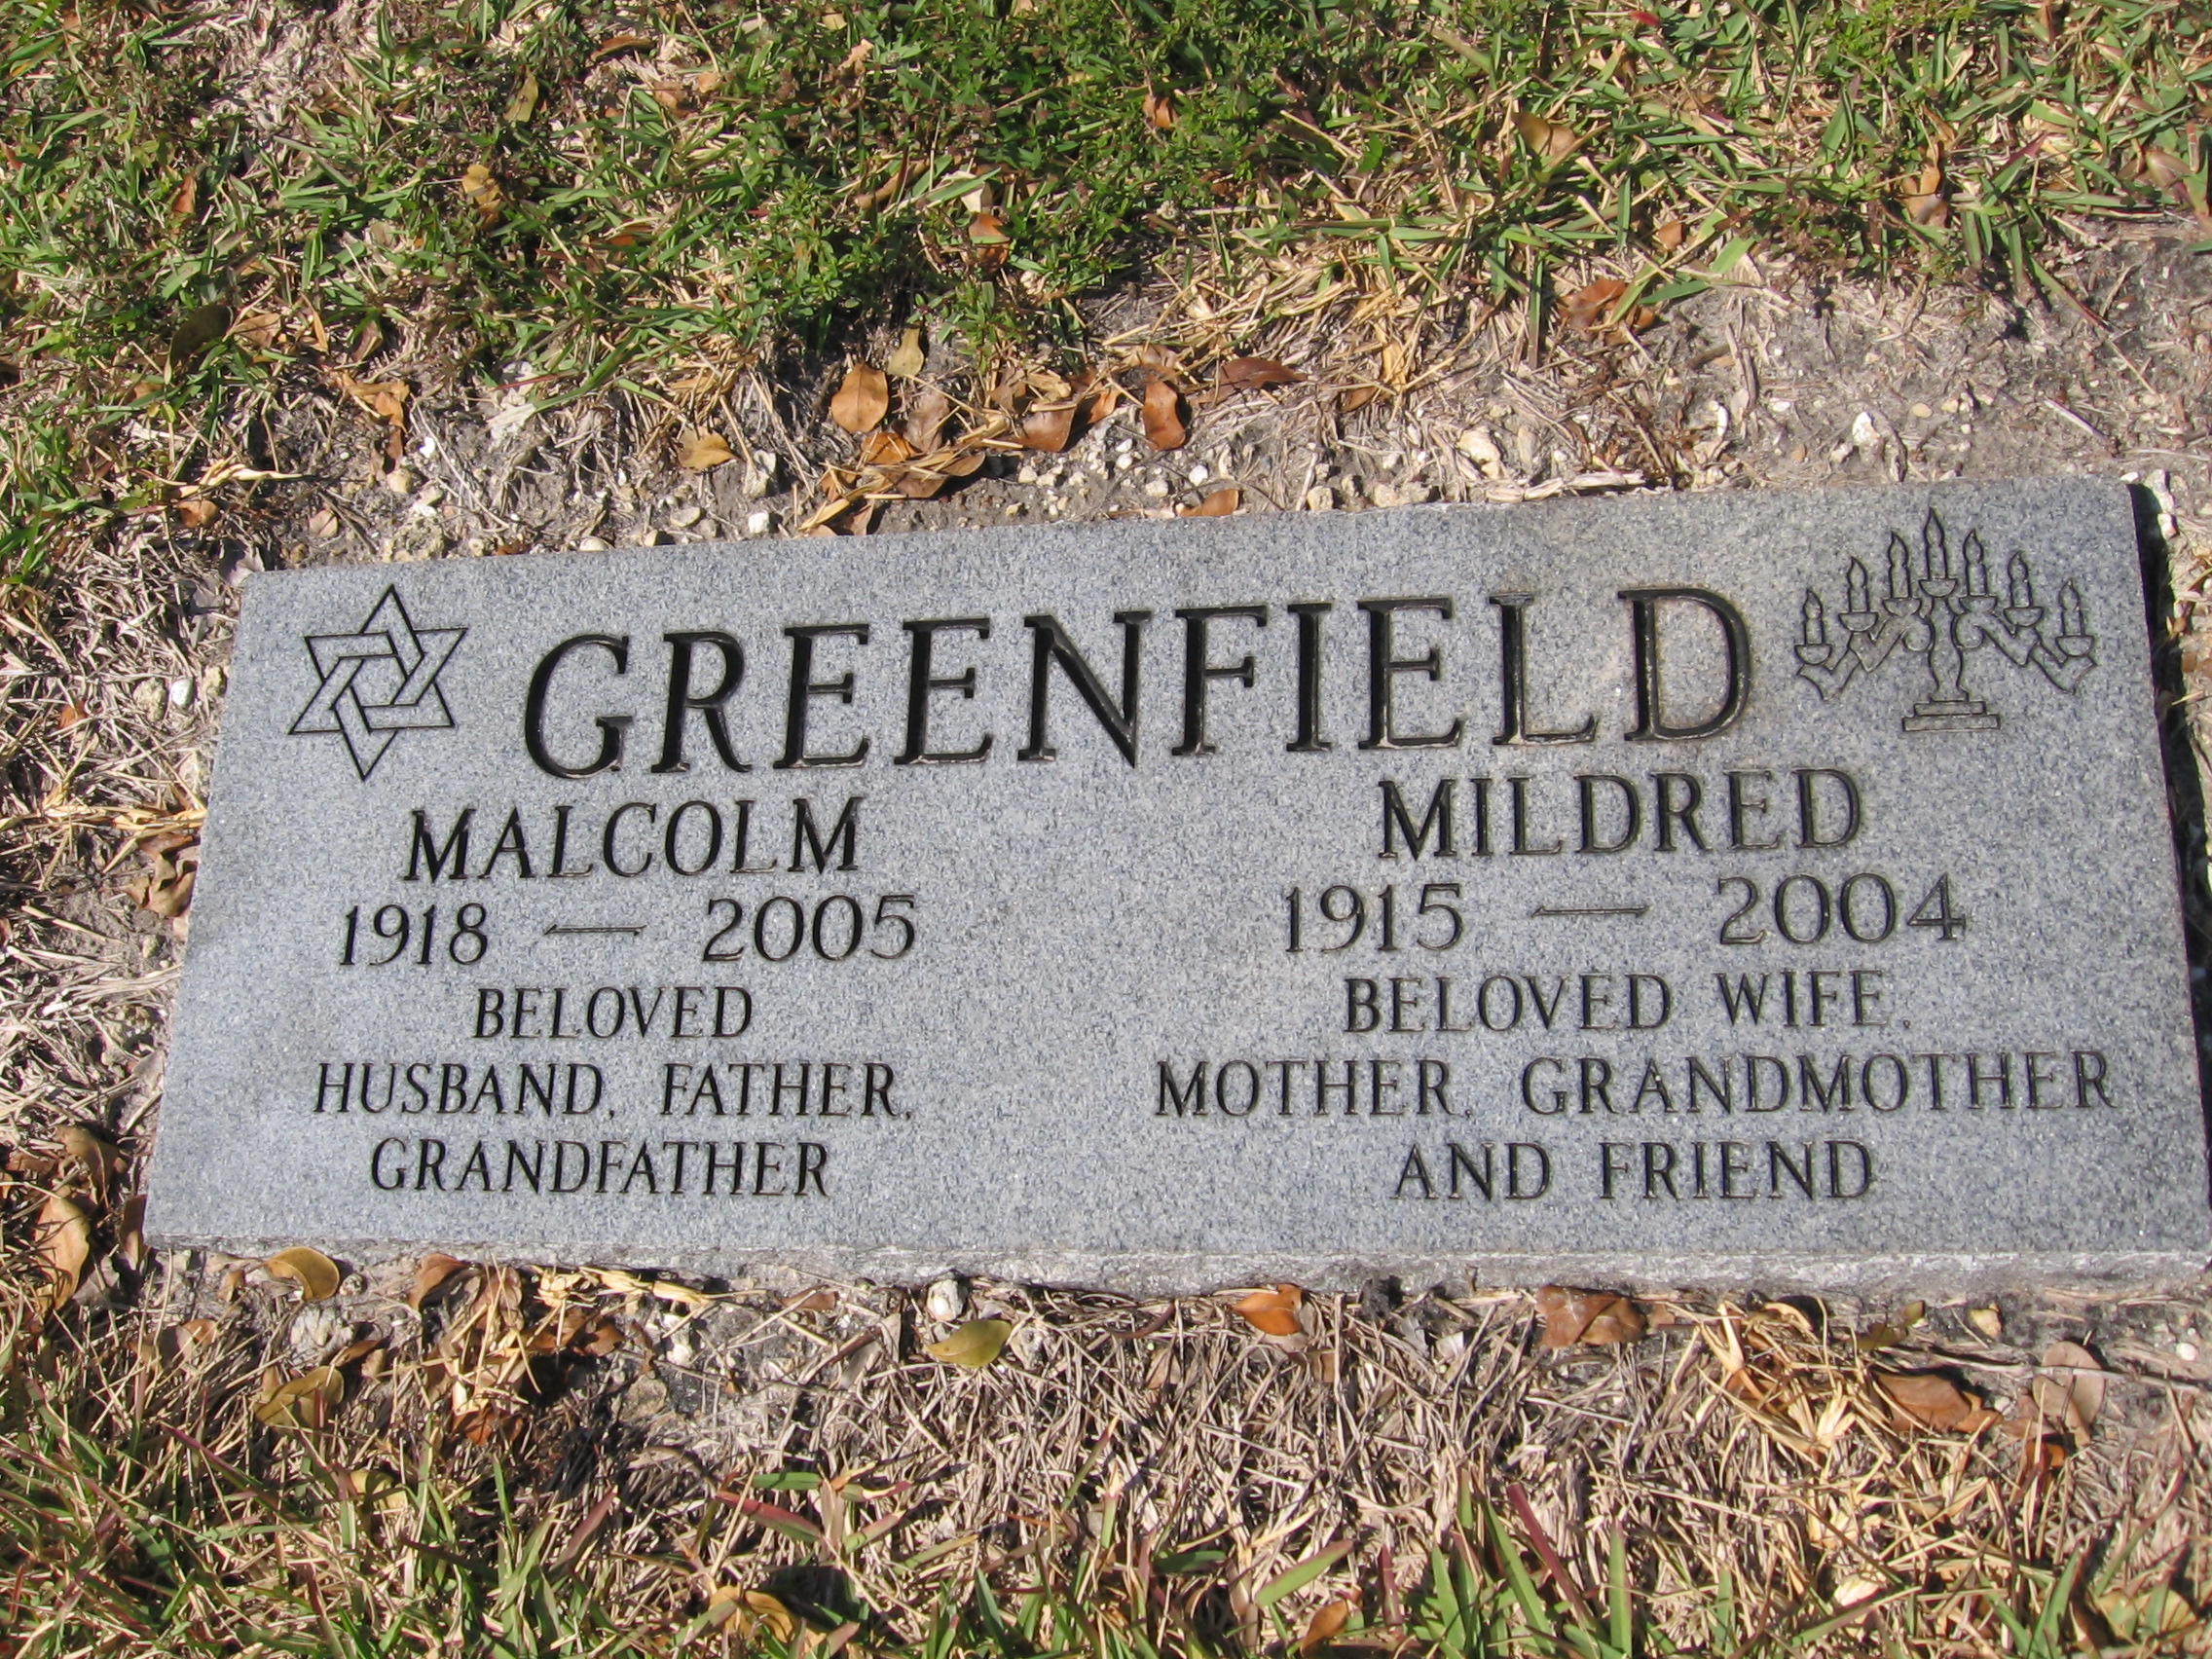 Malcom Greenfield